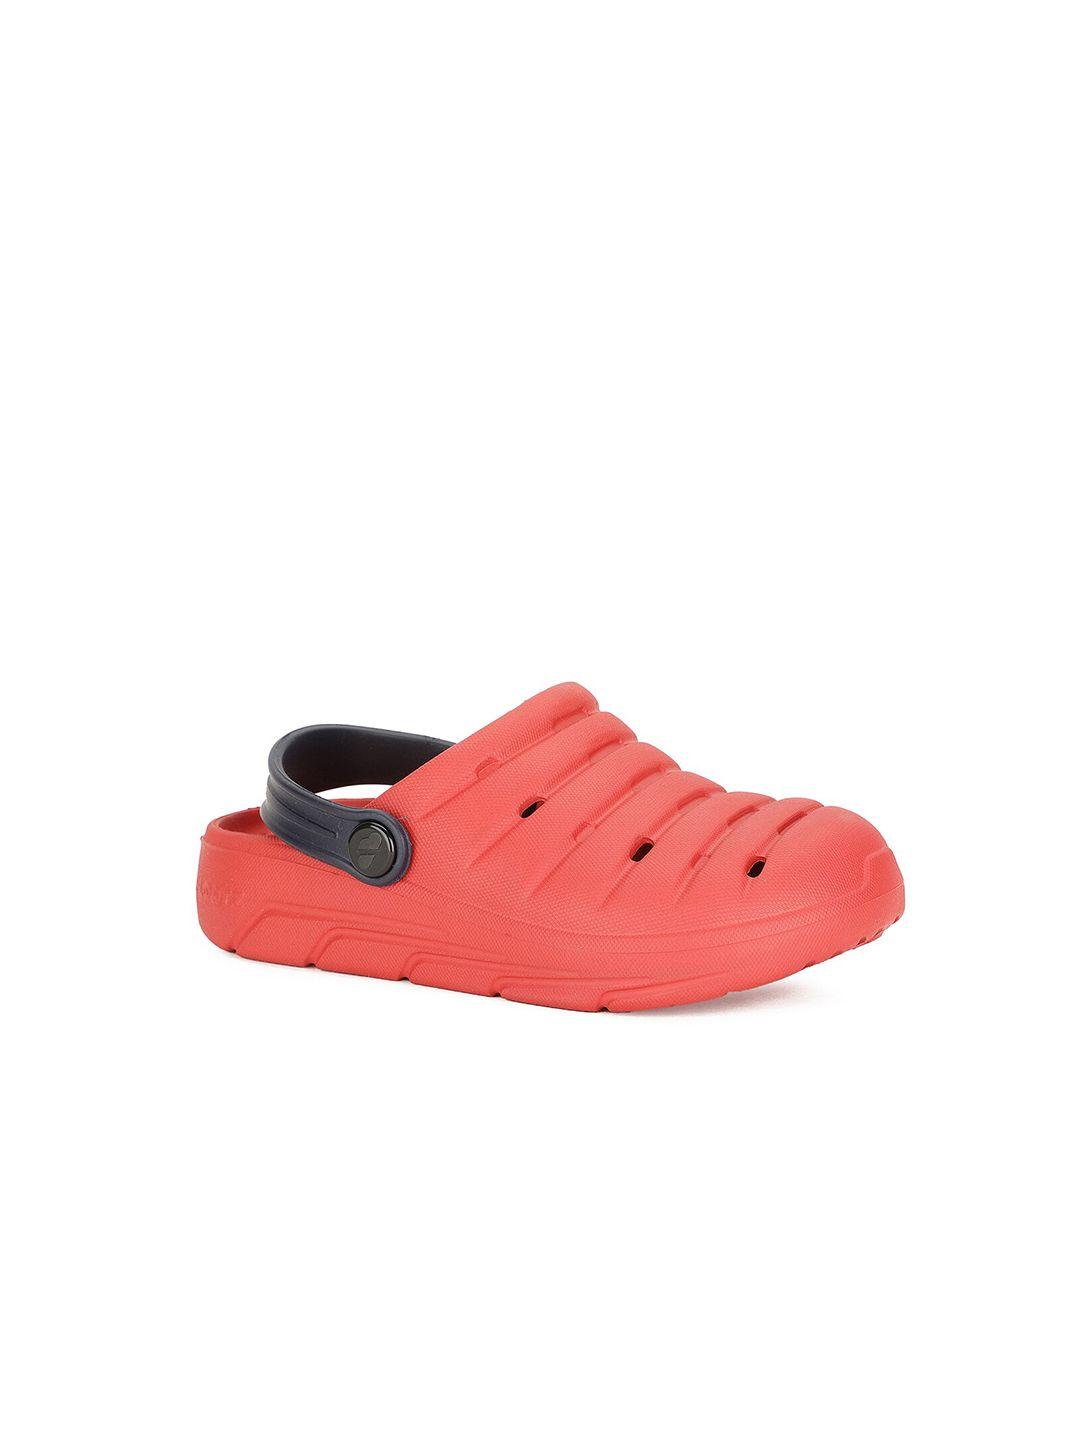 bata boys pink & black clogs sandals